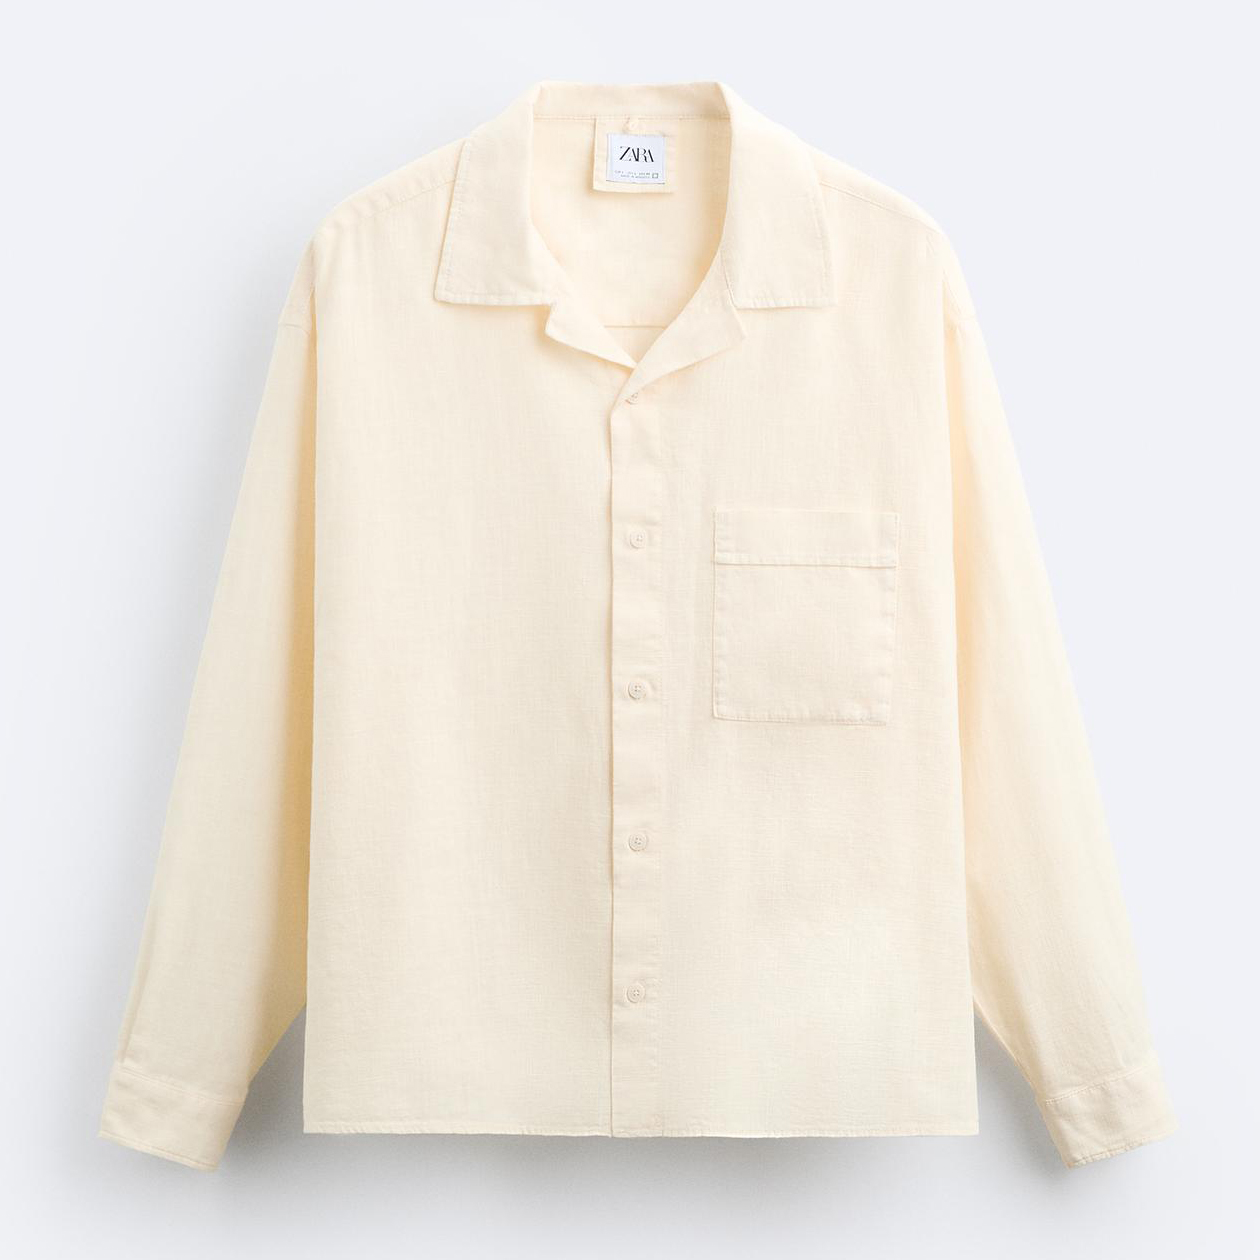 Рубашка Zara Cotton - Linen, кремовый рубашка zara striped linen cotton blend бирюзовый белый